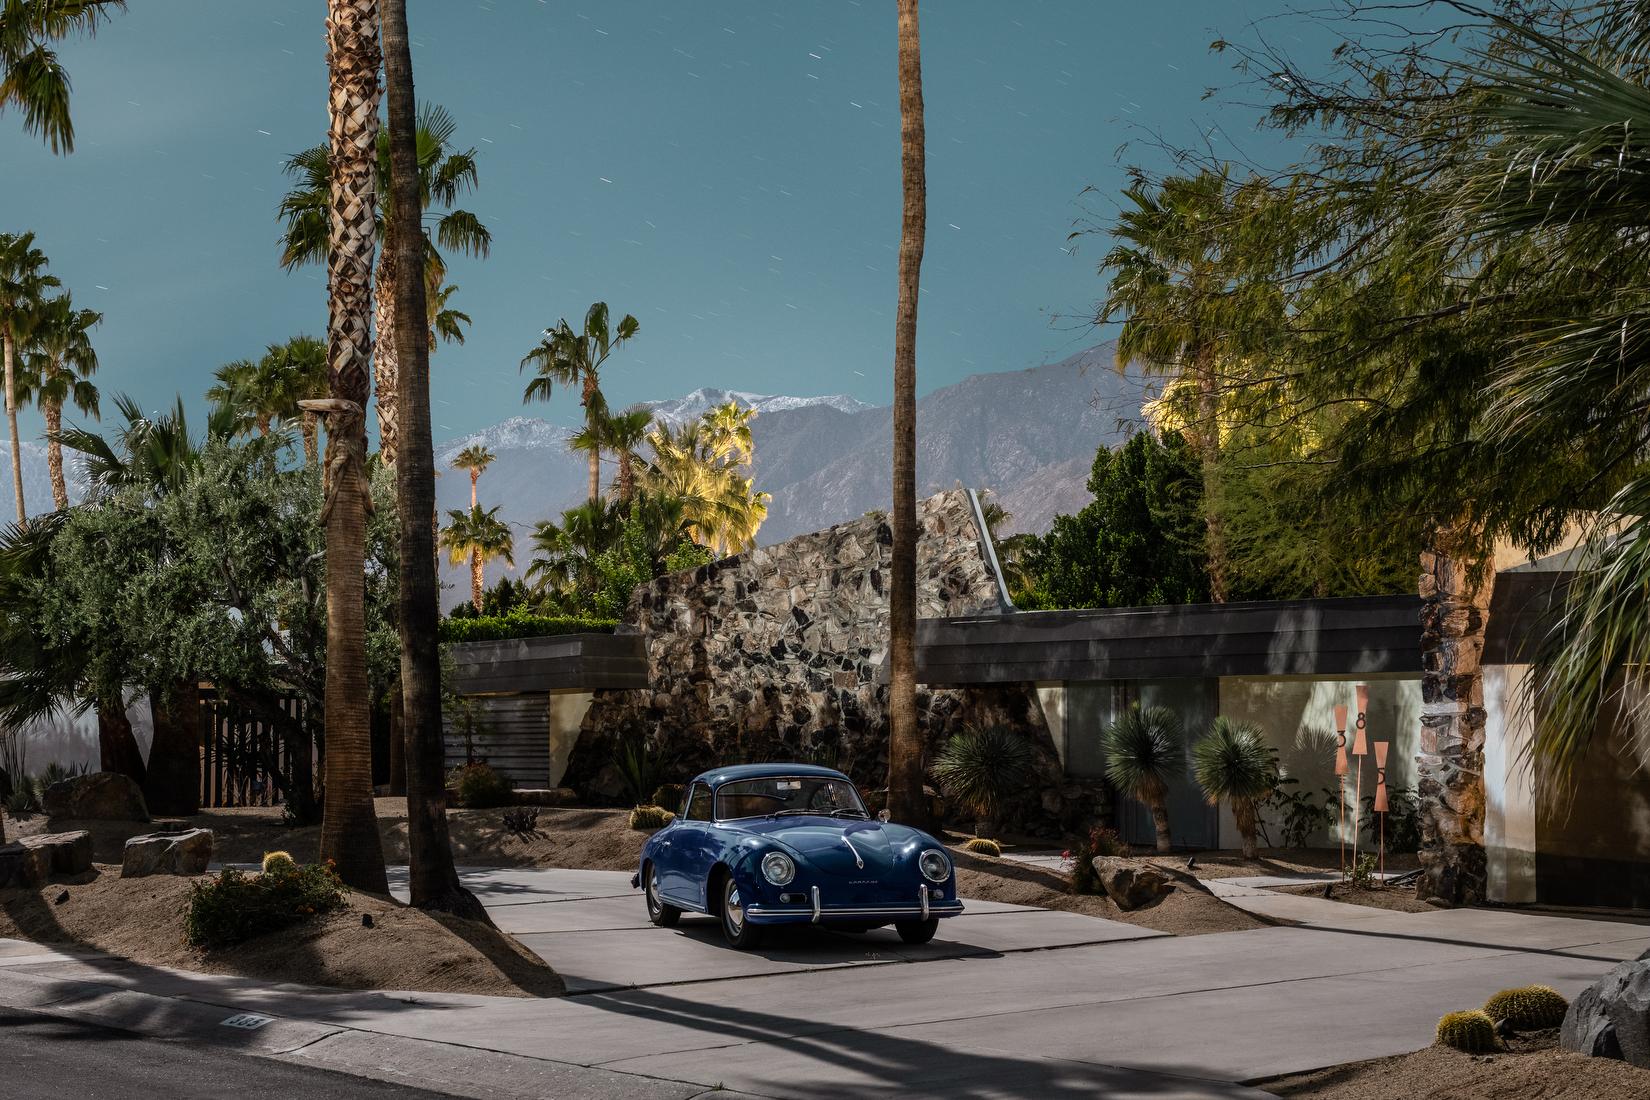 Tom Blachford Color Photograph - Mid Century Vintage 356 Porsche, Midnight Modern Architecture Palm Springs